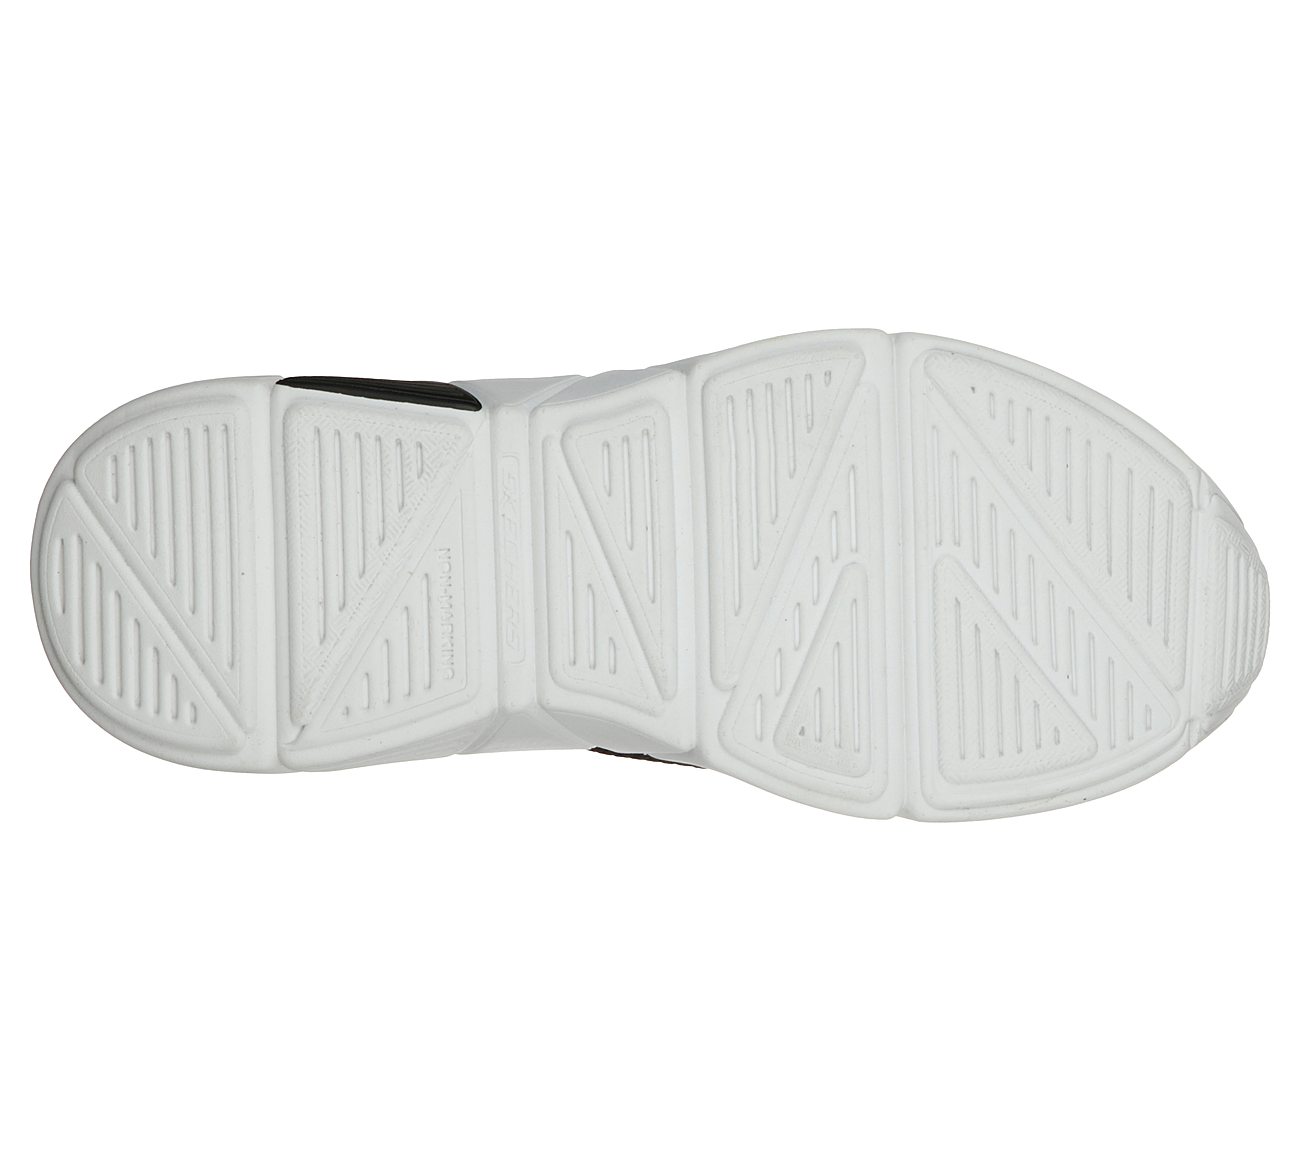 A LINE - DIAMOND GLIDER, BBBBLACK Footwear Bottom View